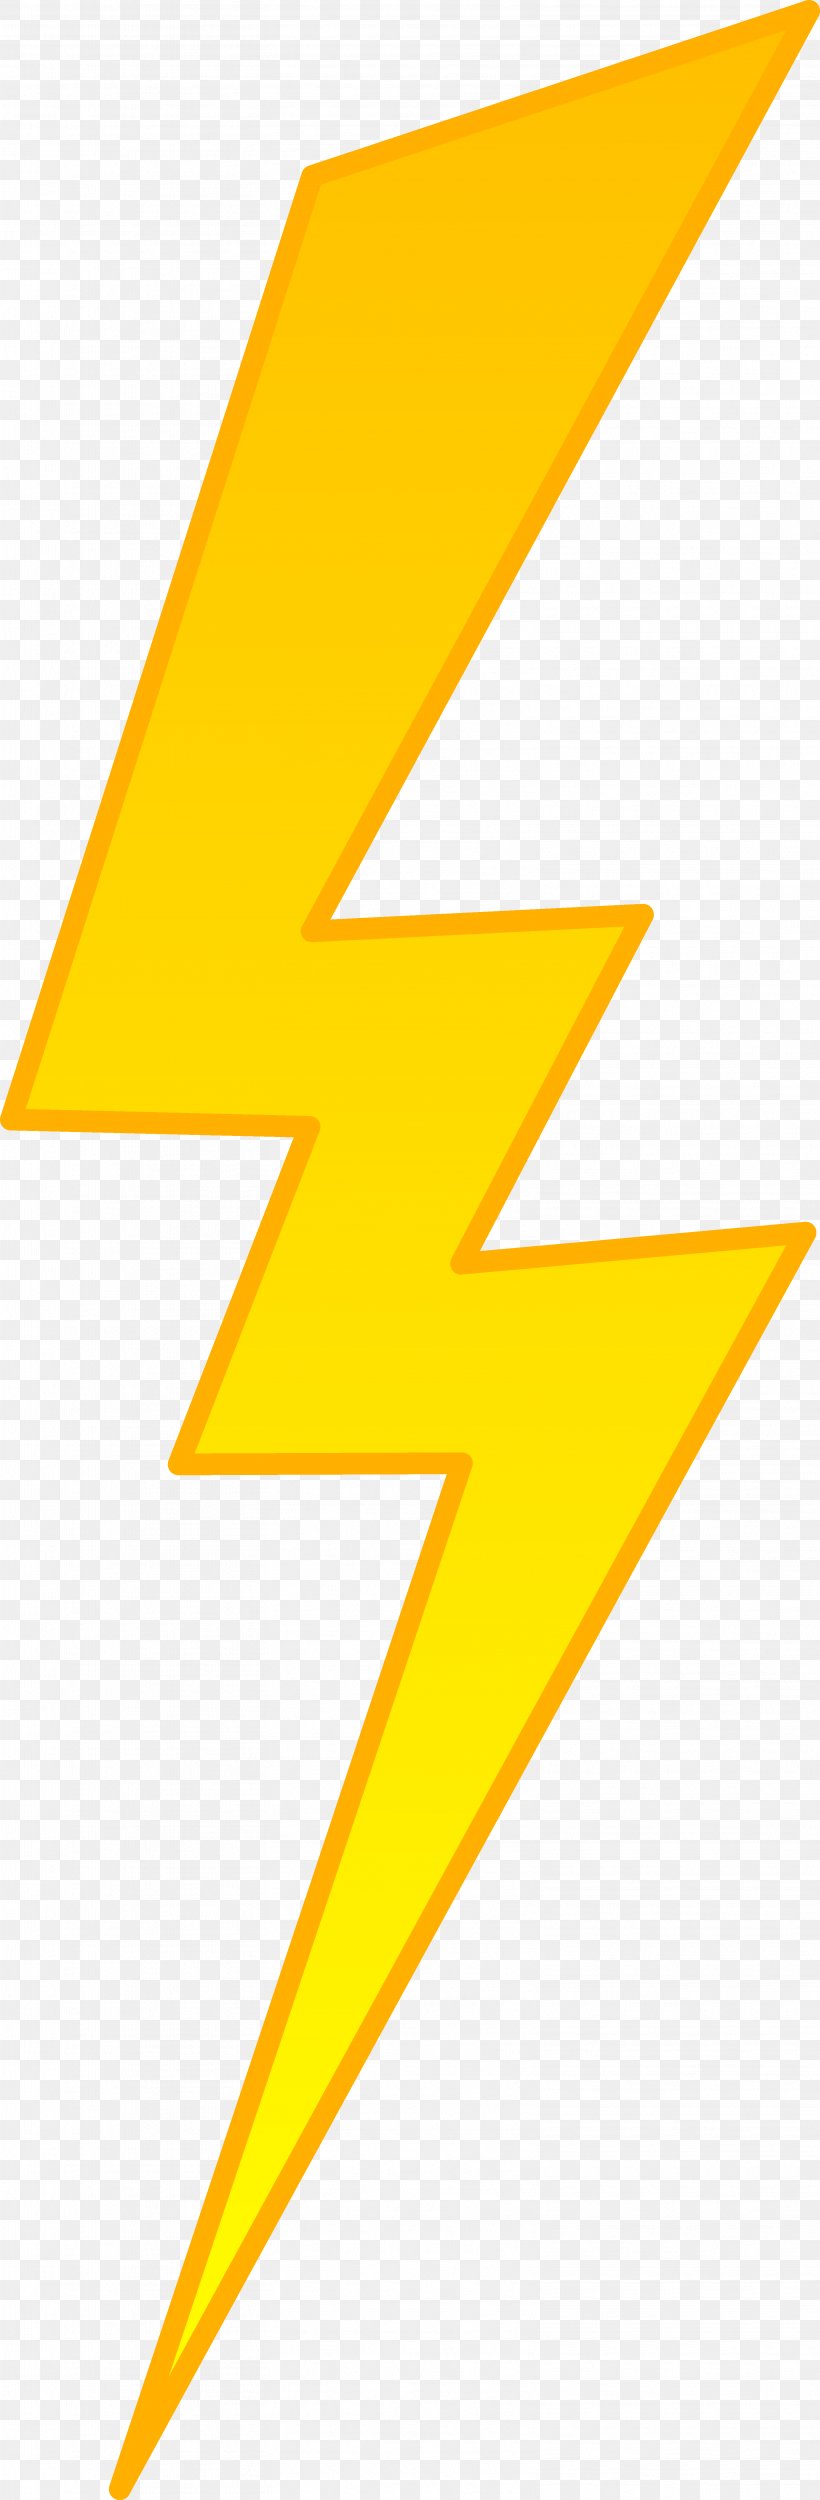 Lightning Drawing Electricity Clip Art, PNG, 3134x9556px, Lightning ...